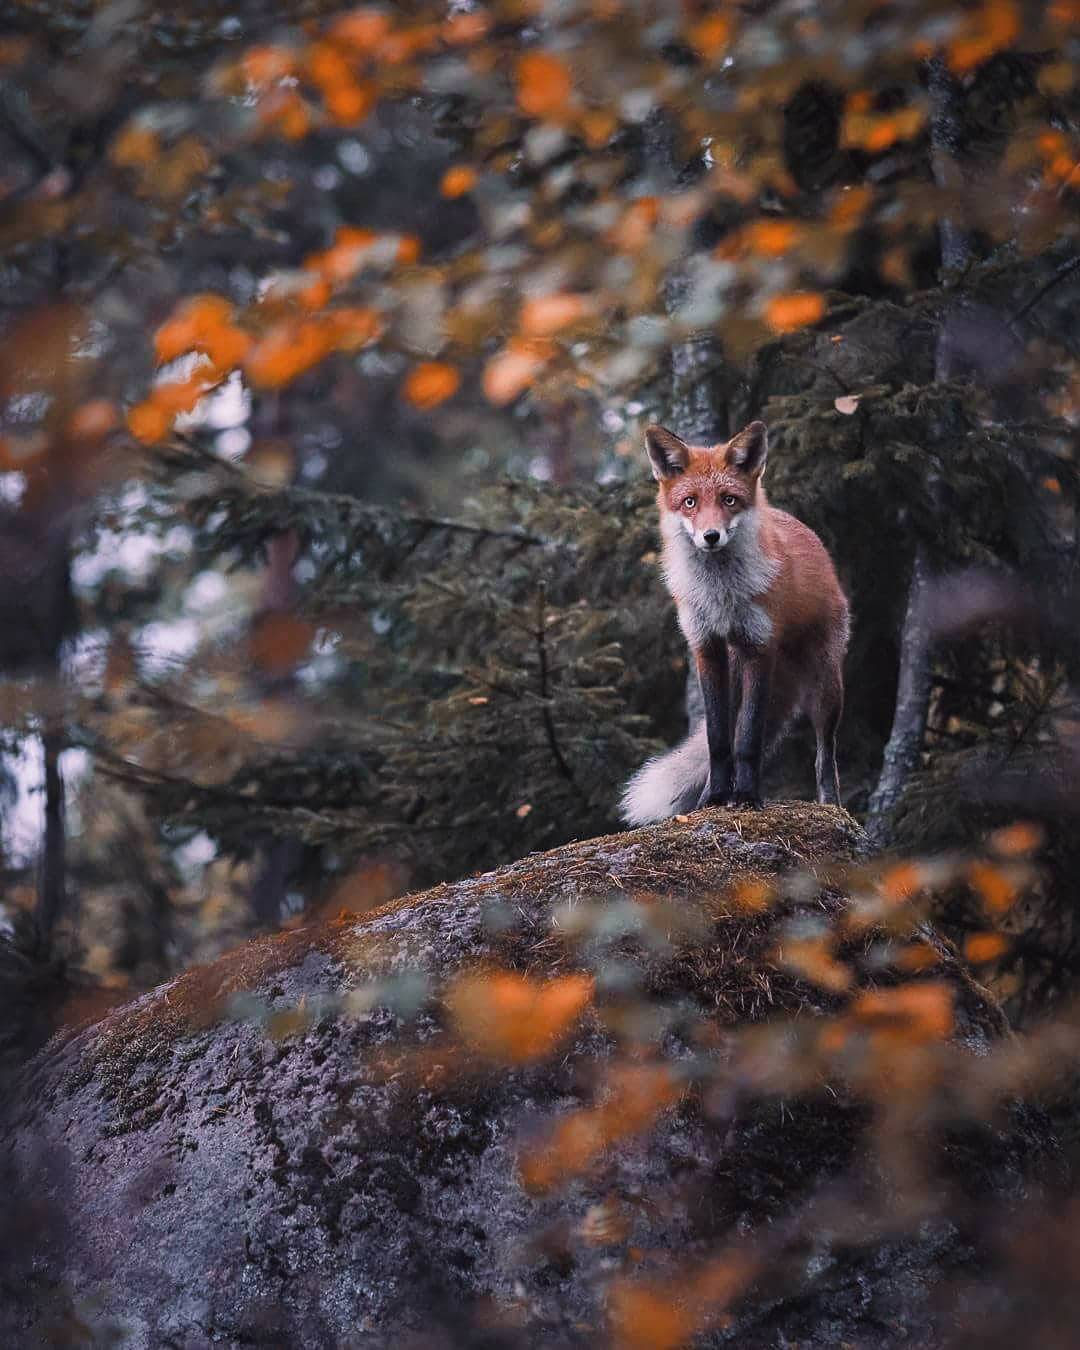 Photos of Forest Animals by Joachim Munter